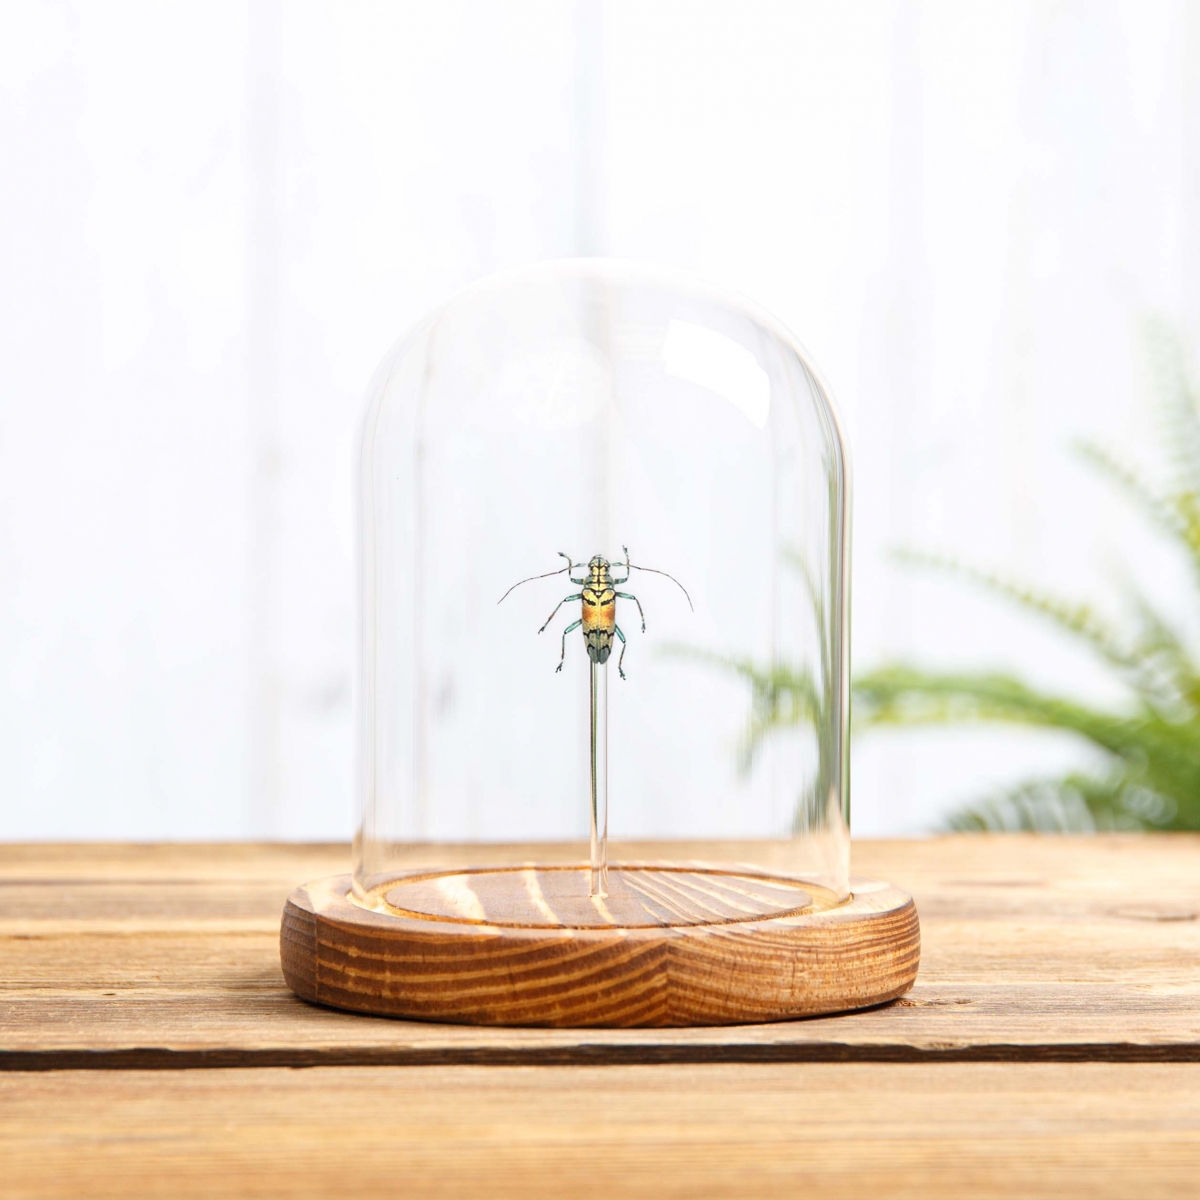 Gold Longhorn Beetle in Glass Dome with Wooden Base (Tmesisternus rafaelae)